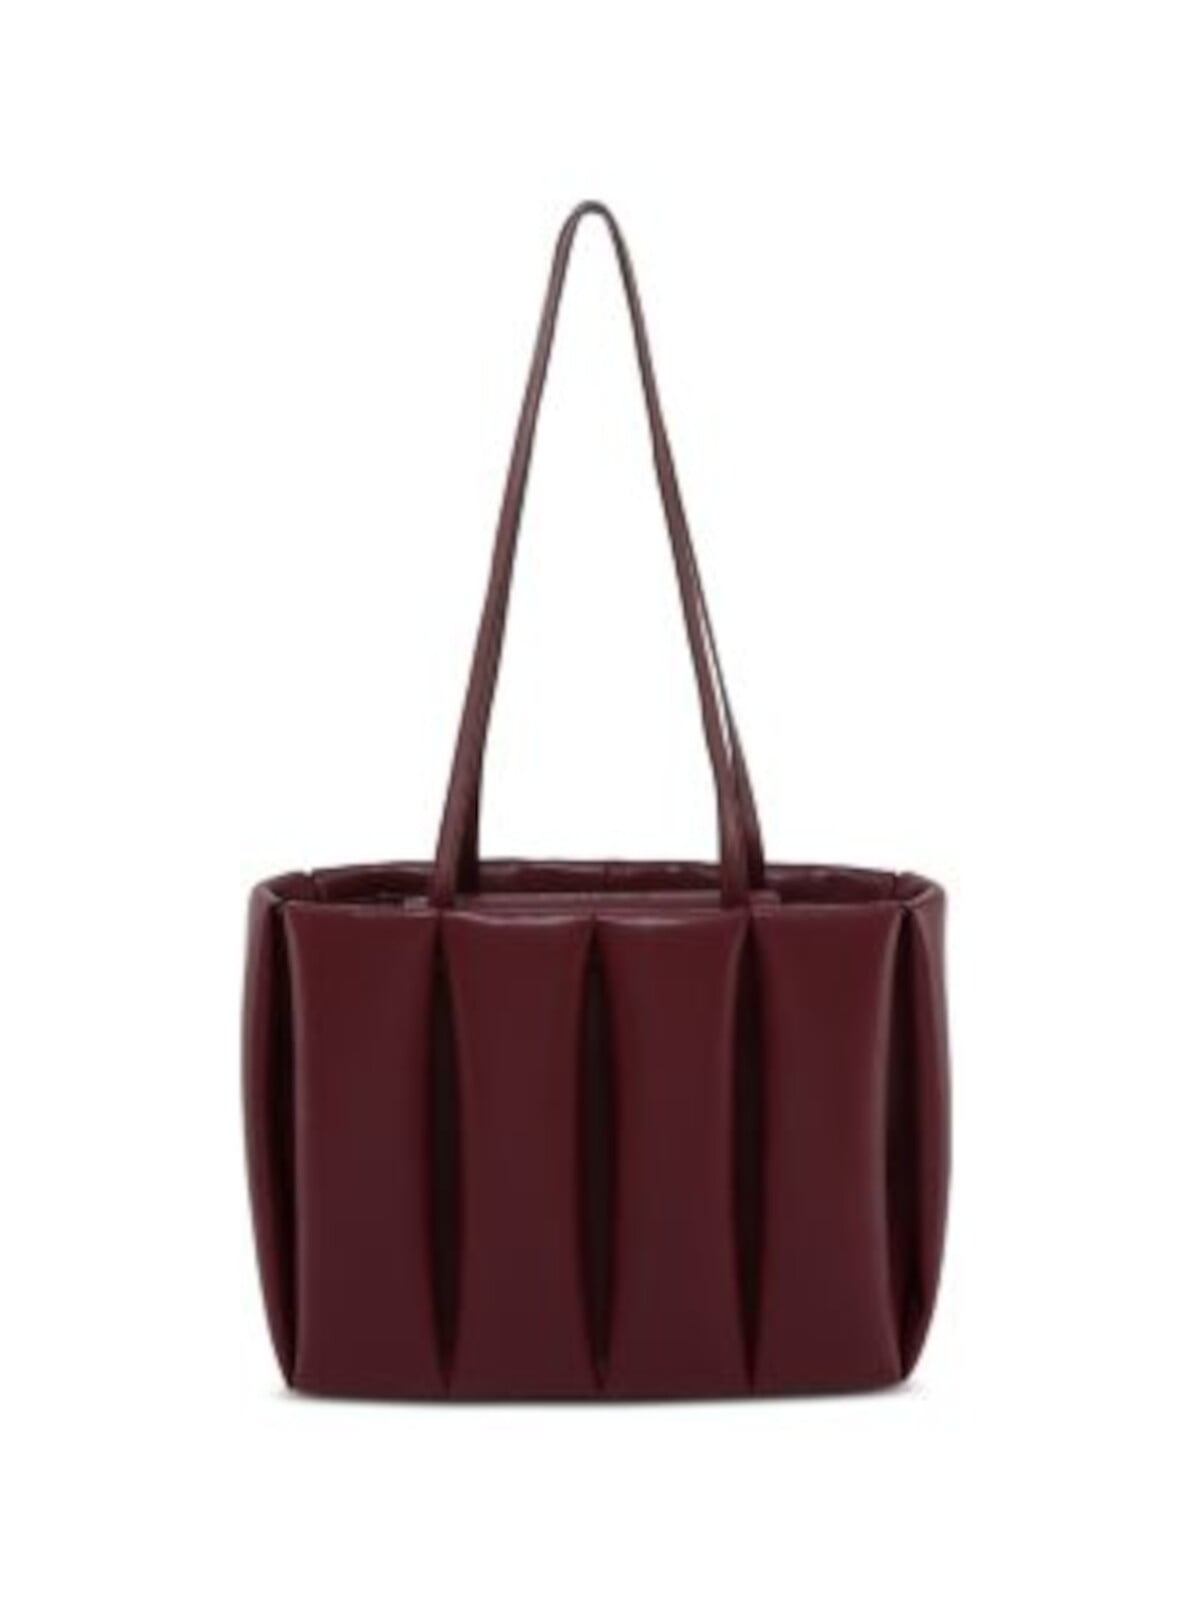 THEMOIRE' - Tia Eco Leather Clutch Bag